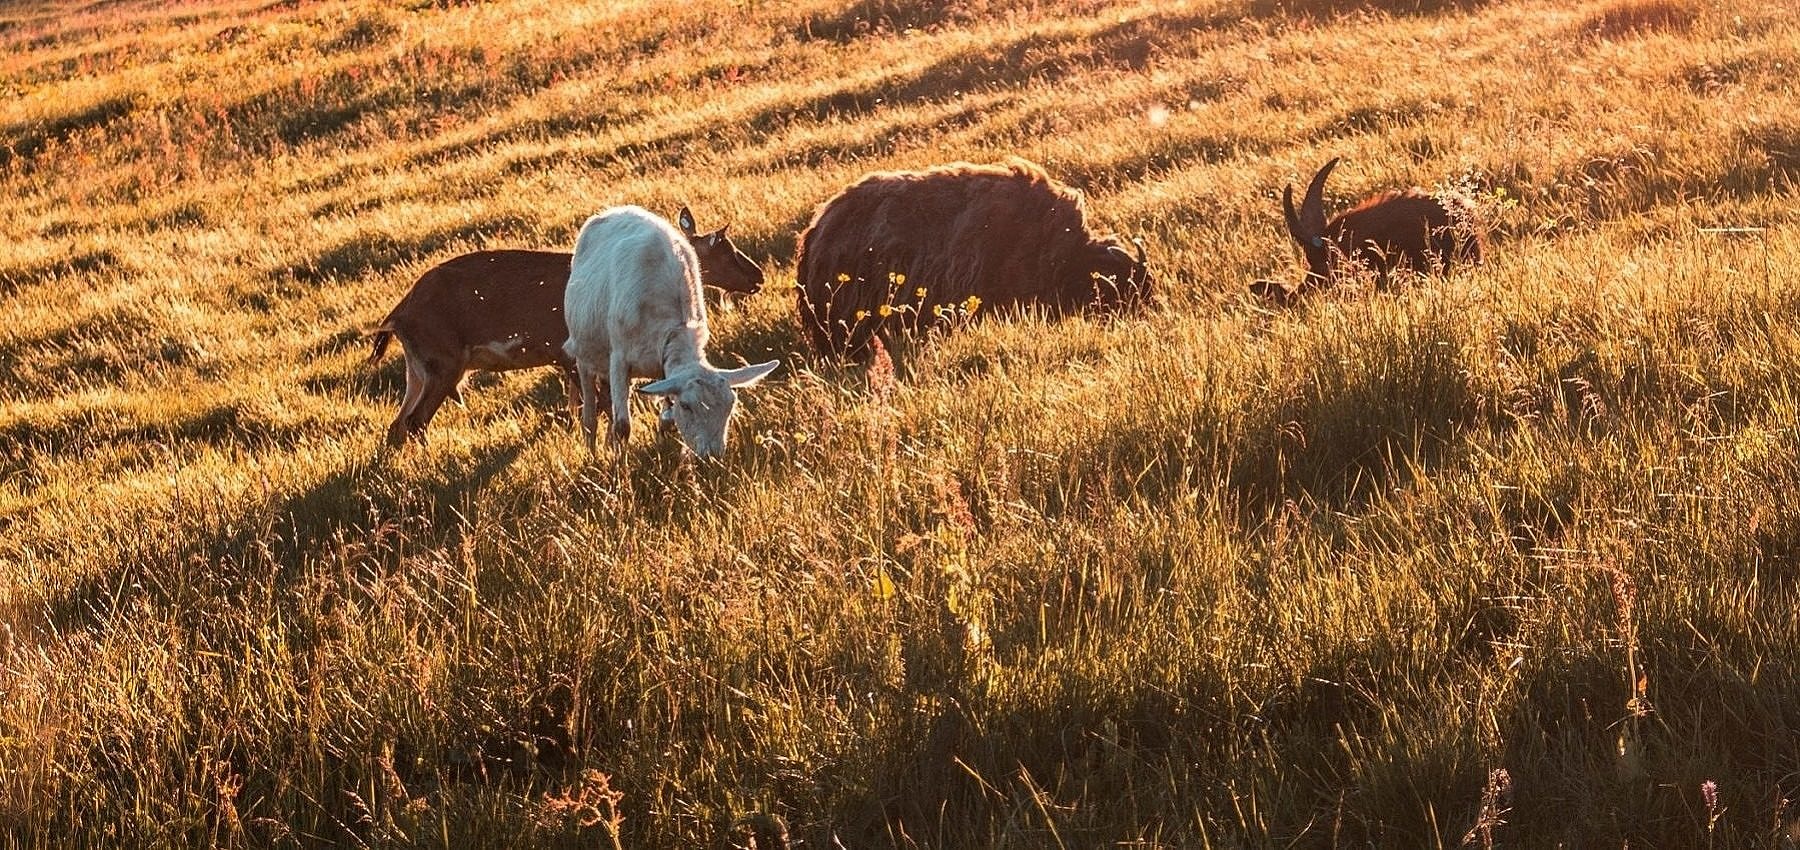 Goats grazing in a field